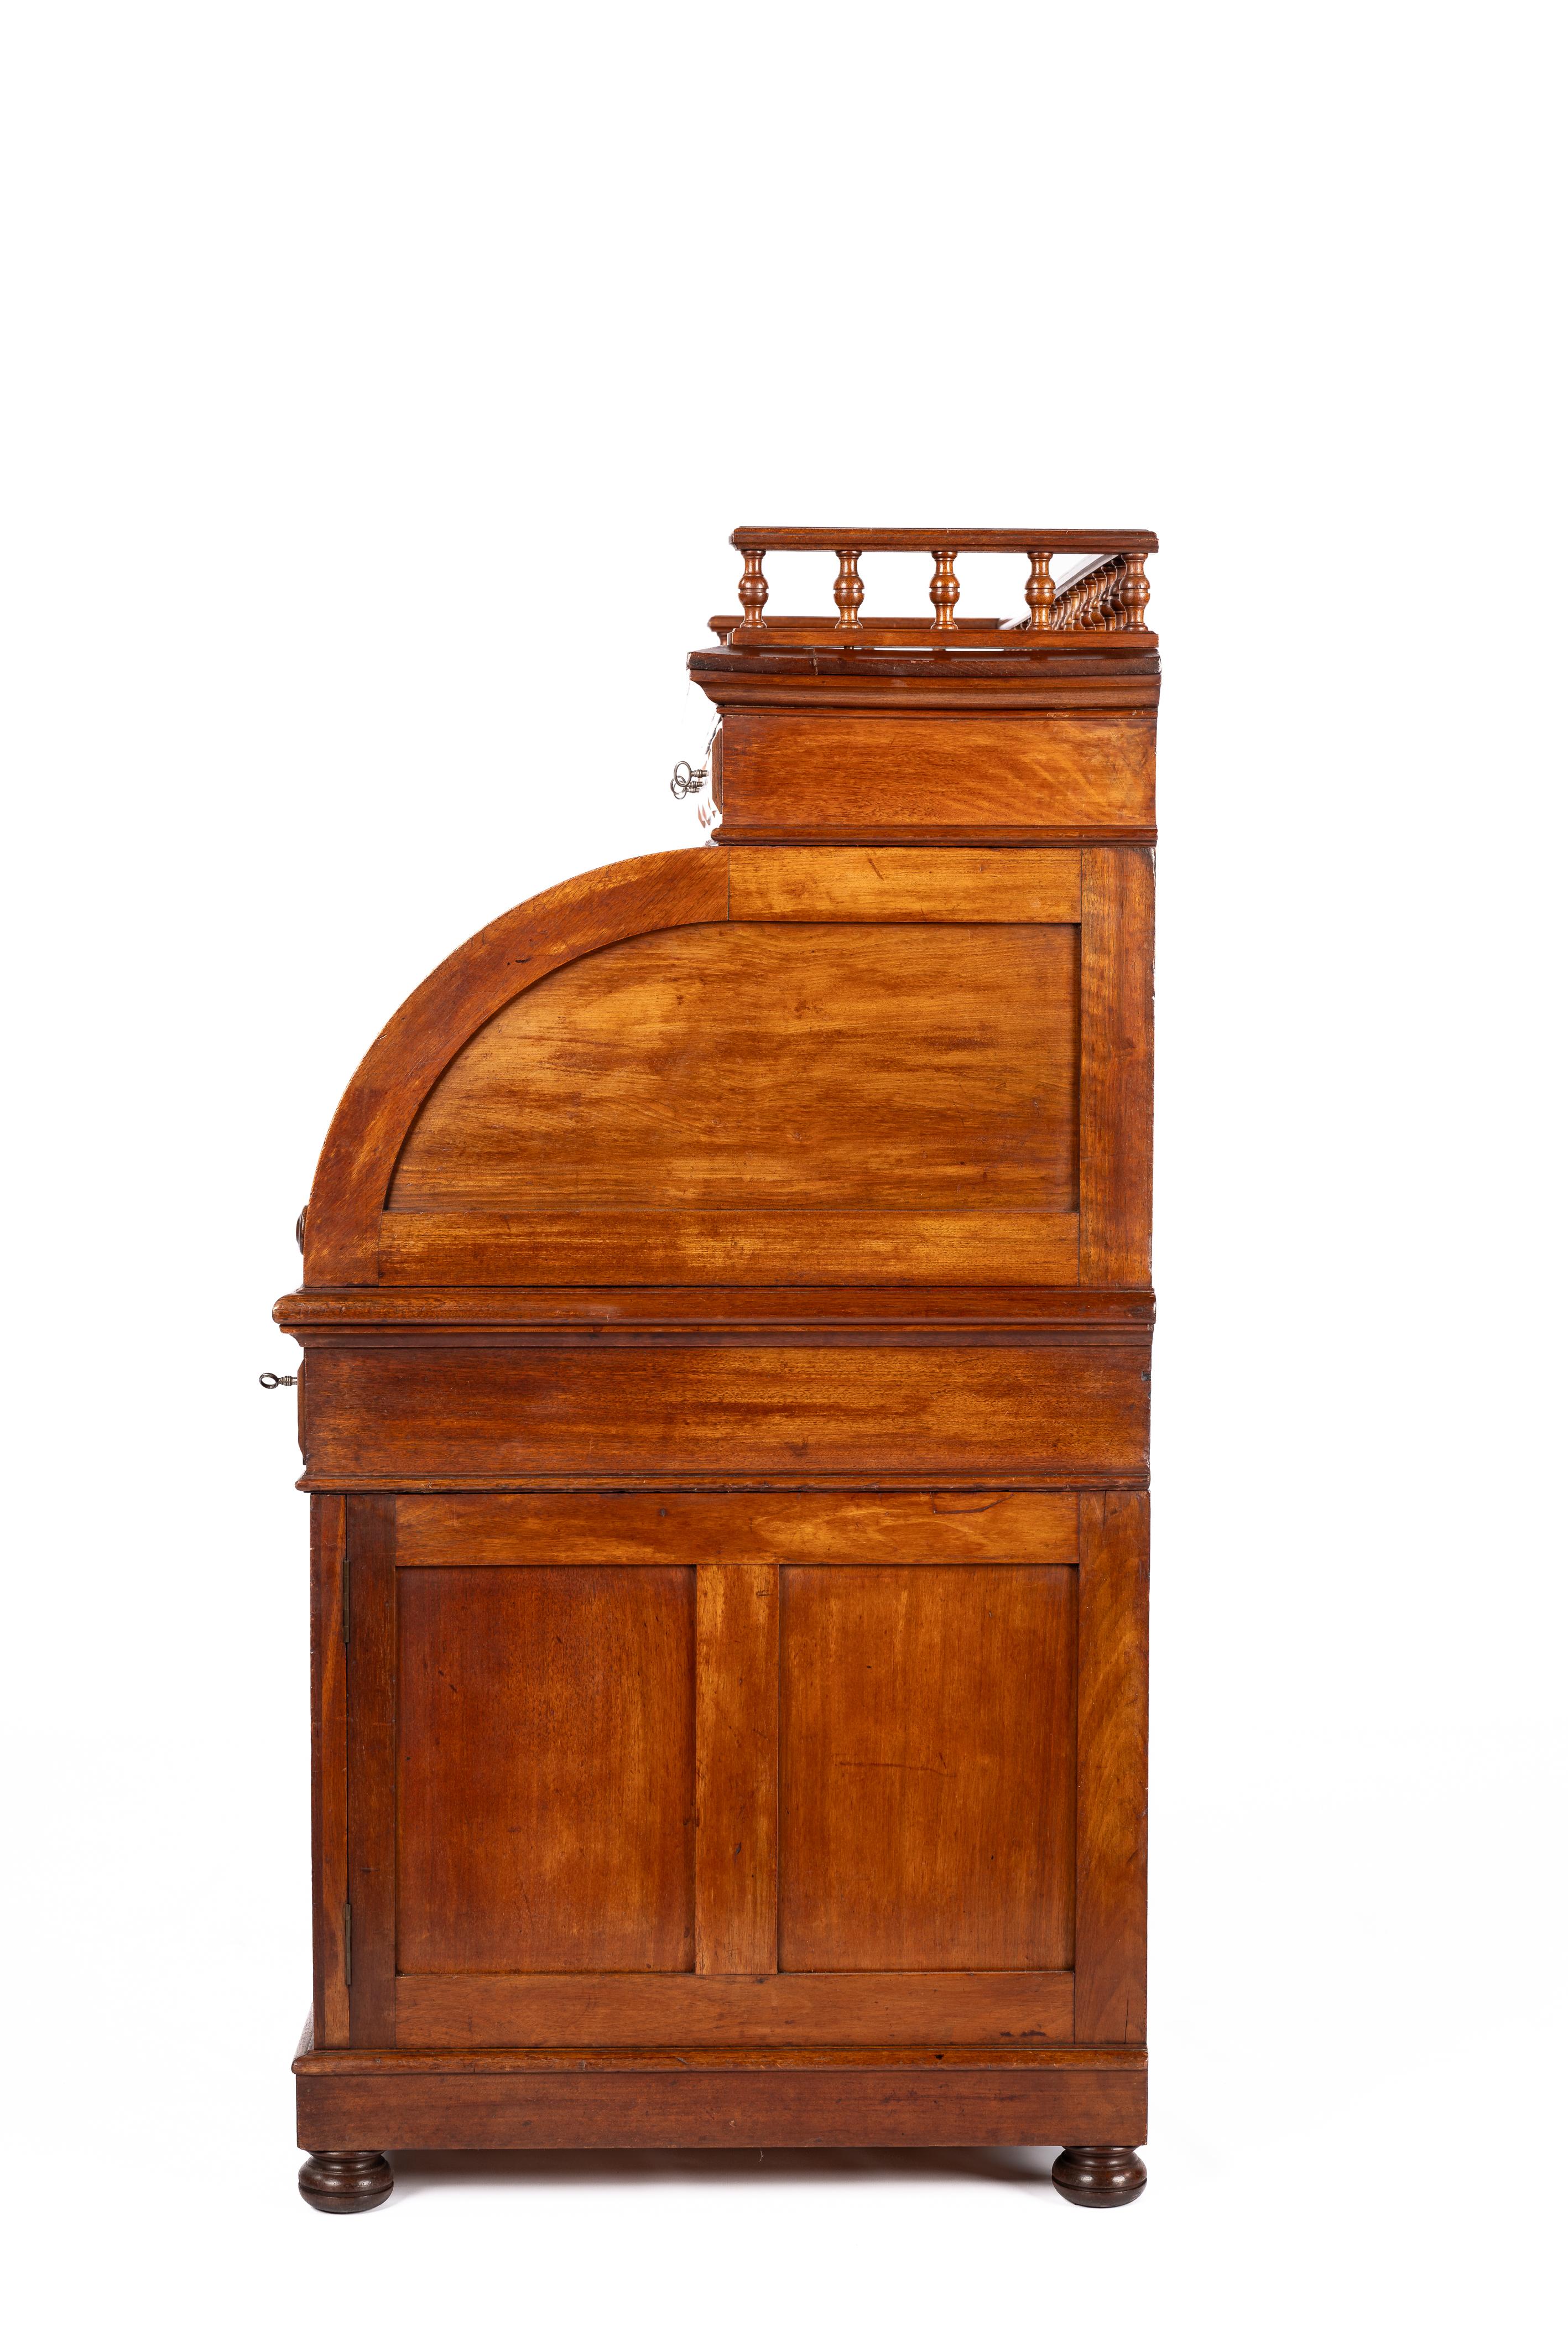 19th Century Rare Antique 19th century Dutch warm honey color  classic Cylinder Desk  For Sale